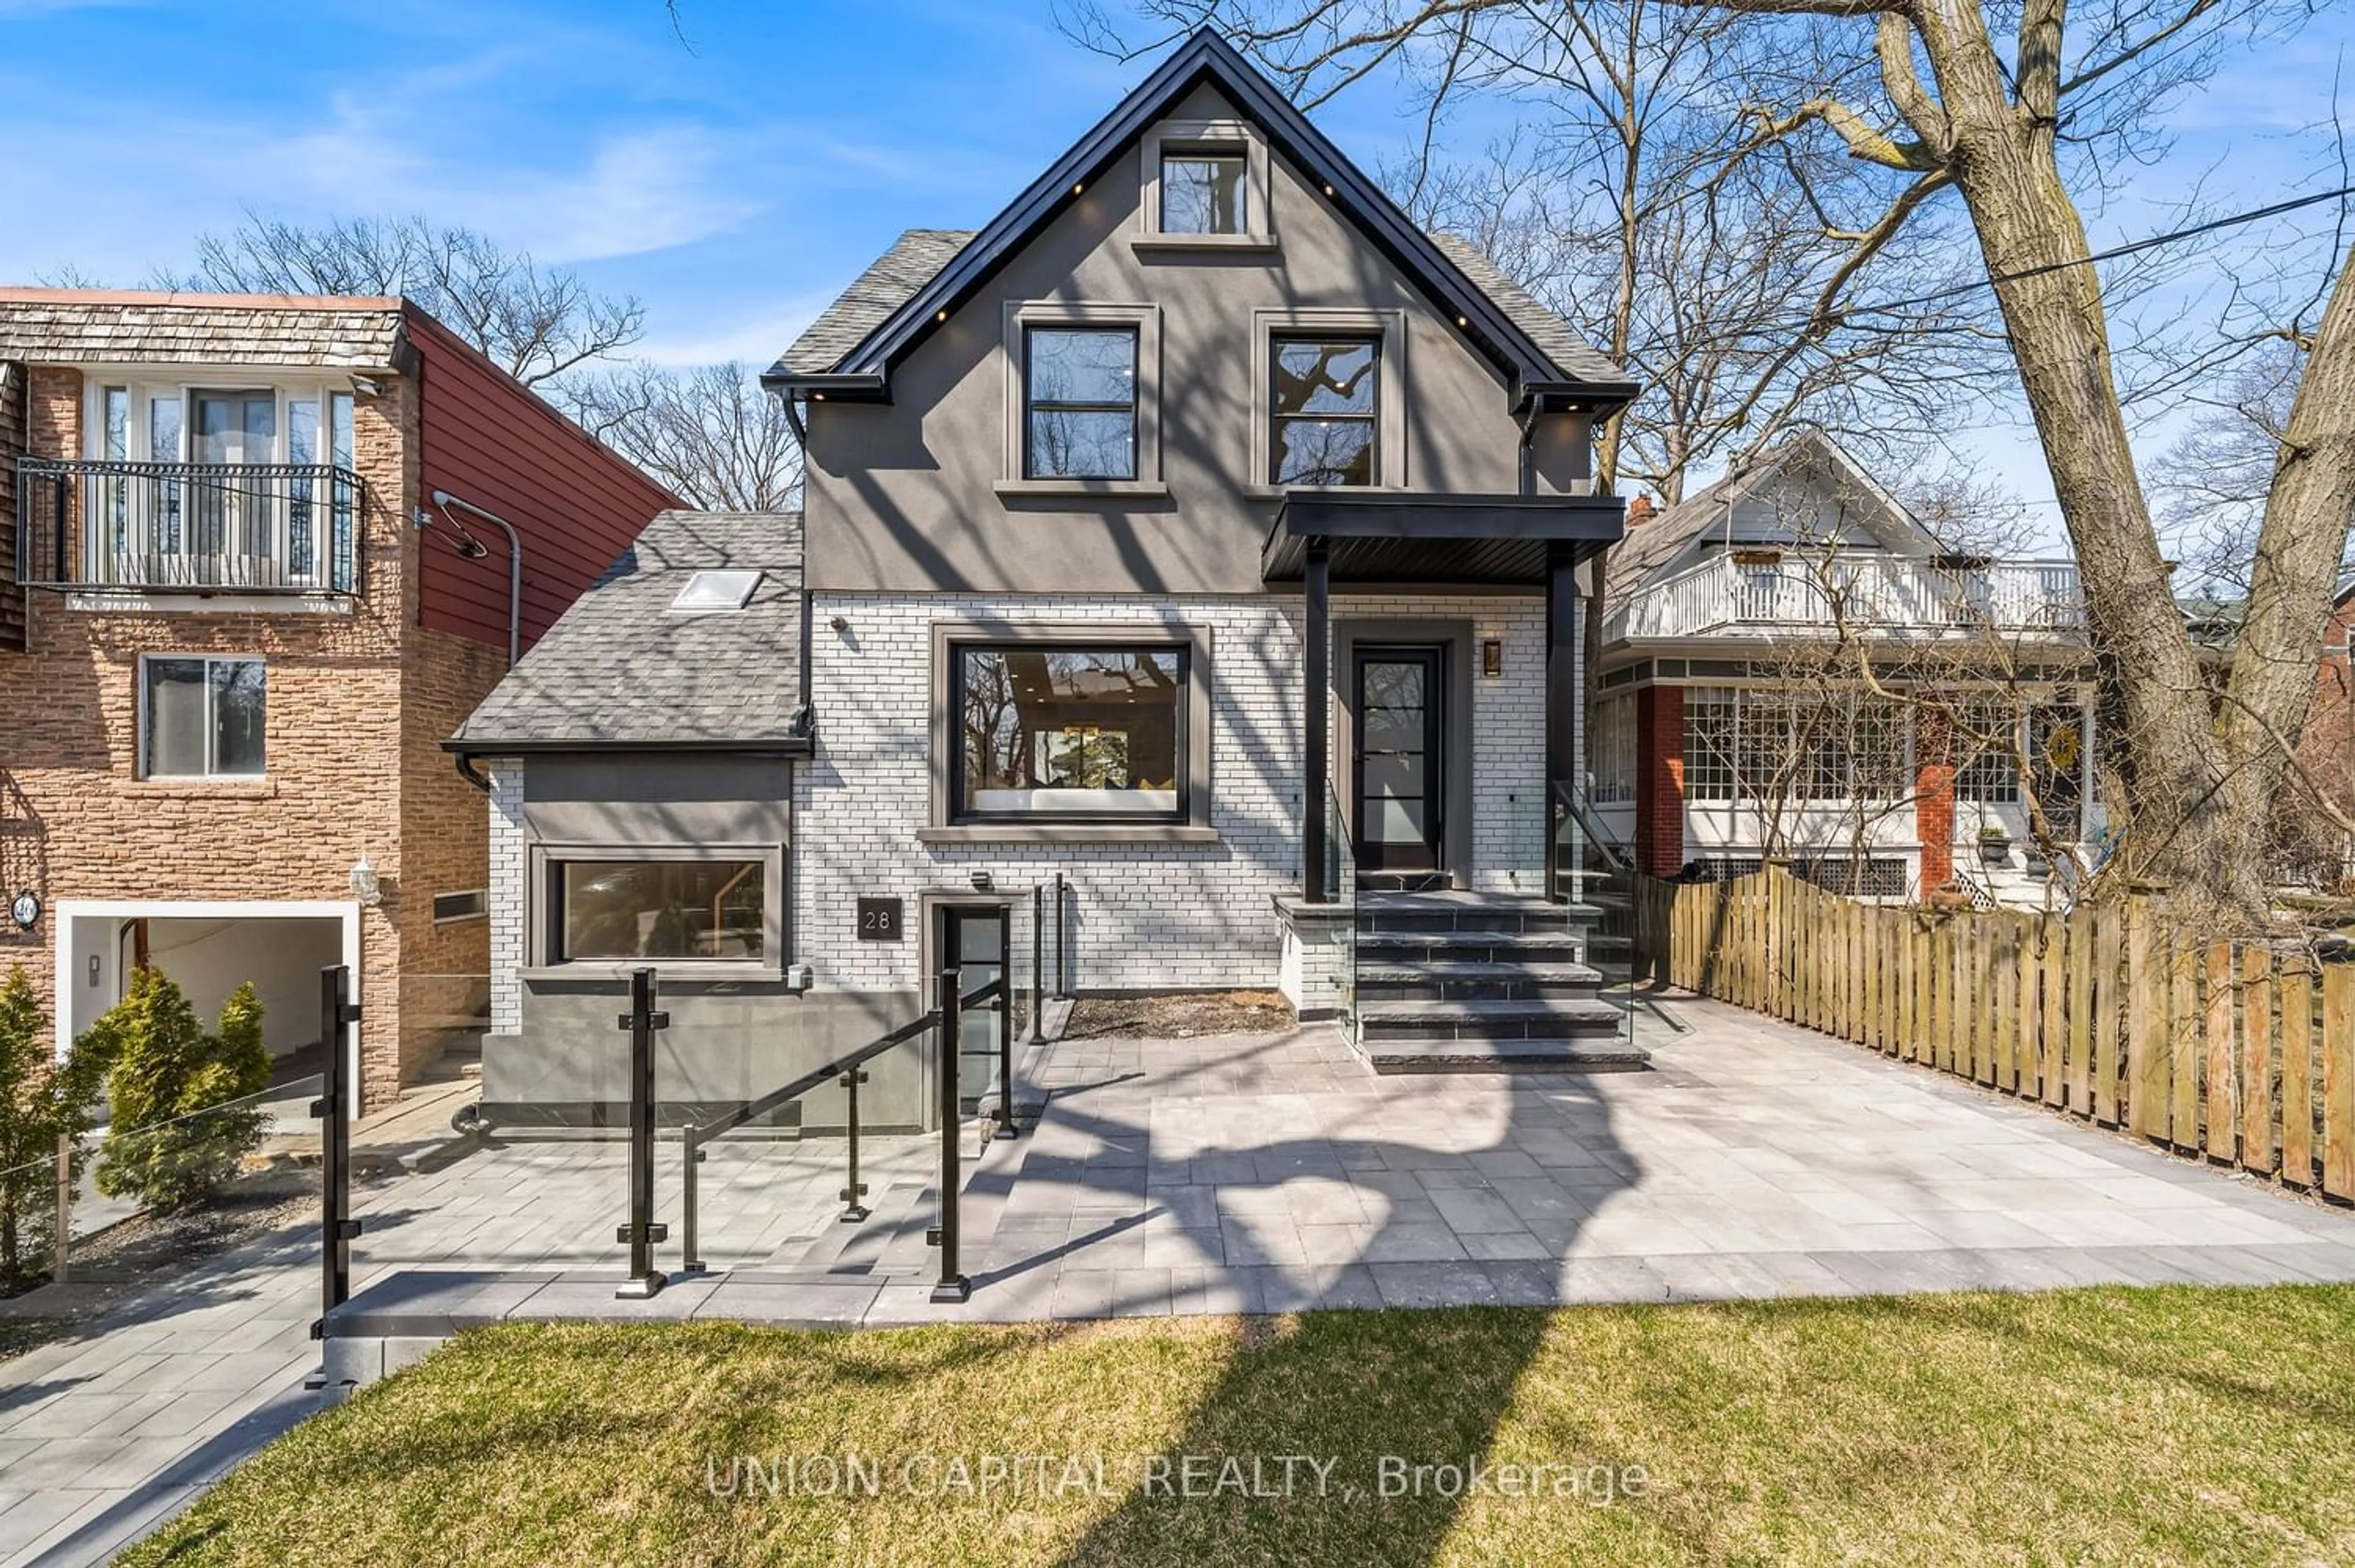 Home with brick exterior material for 28 Pine Ave, Toronto Ontario M4E 1L8